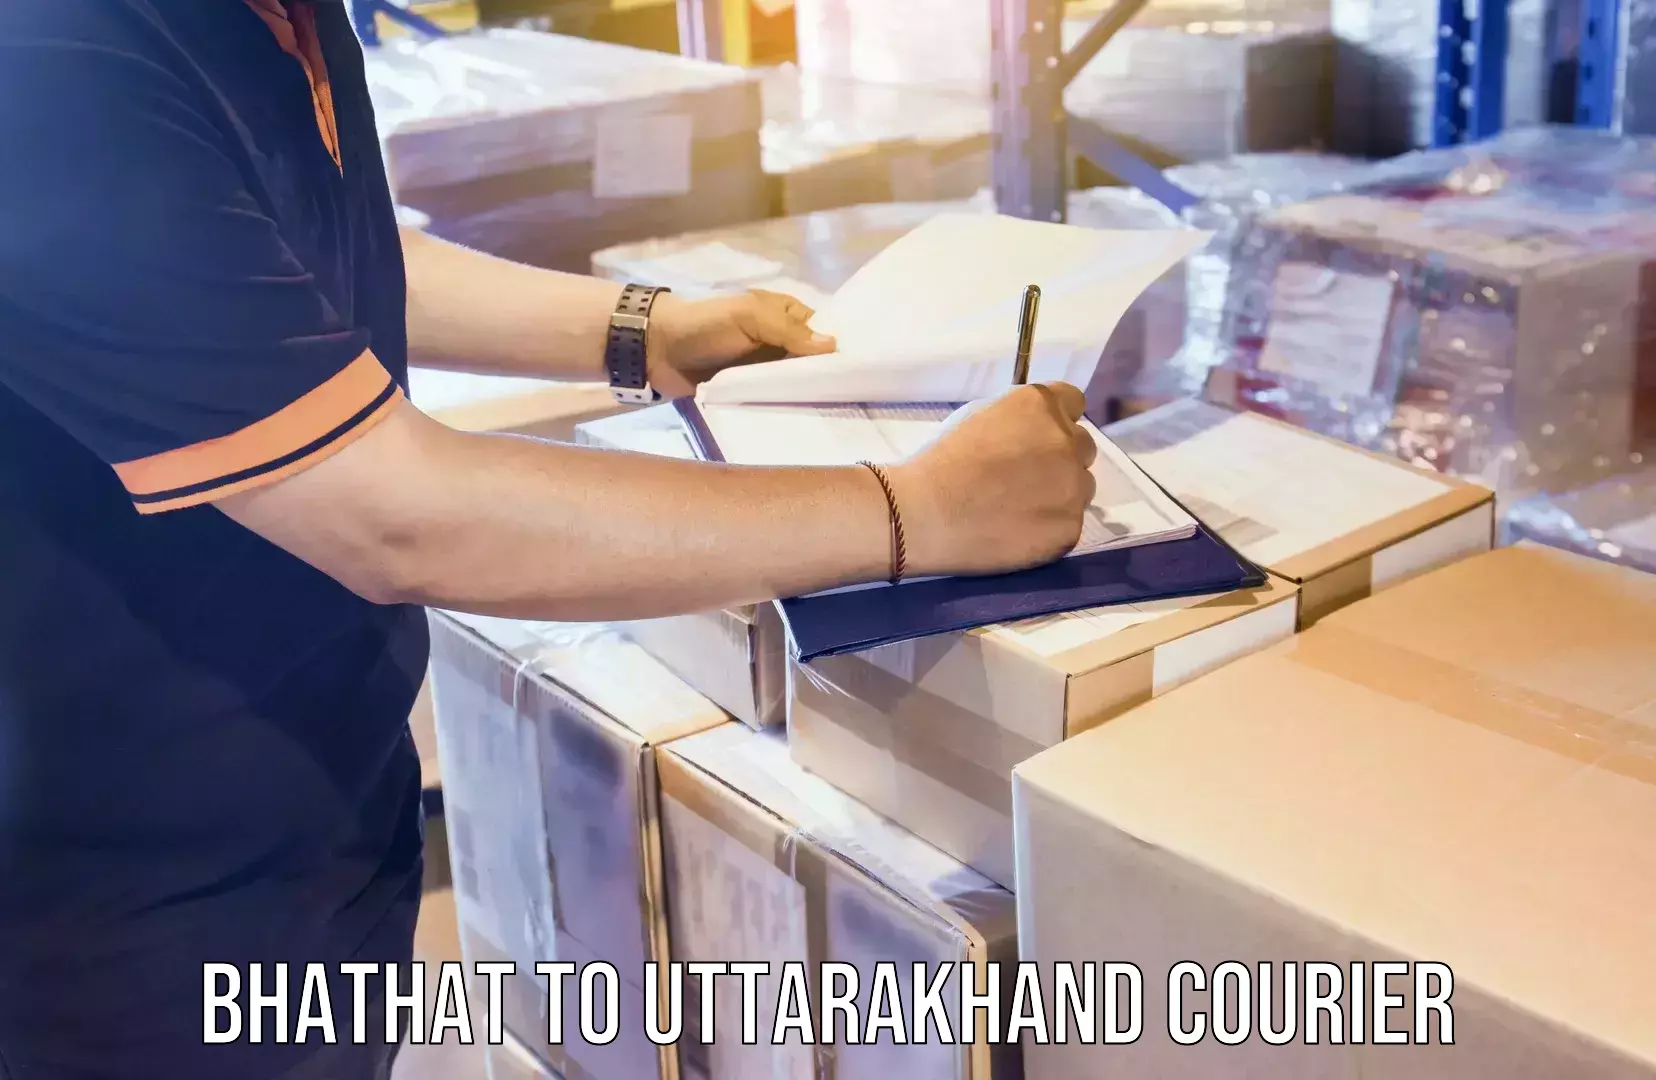 Global shipping networks Bhathat to Uttarakhand